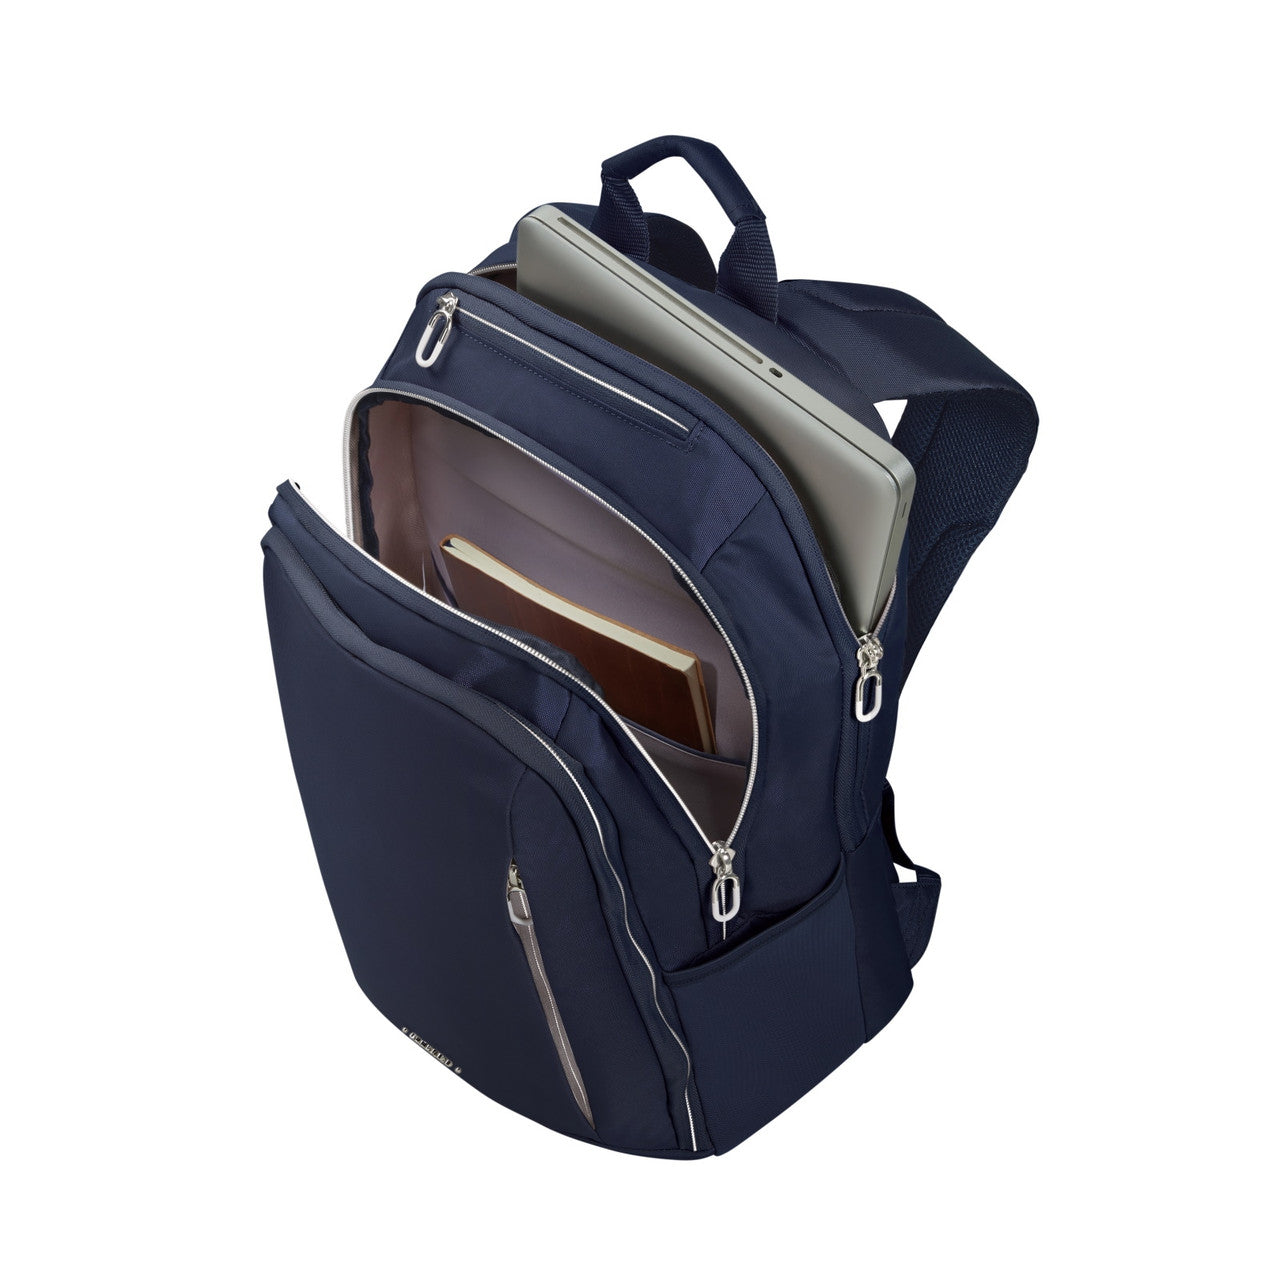 Samsonite - GUARDIT CLASSY 15.6in Backpack - MIDNIGHT BLUE-6